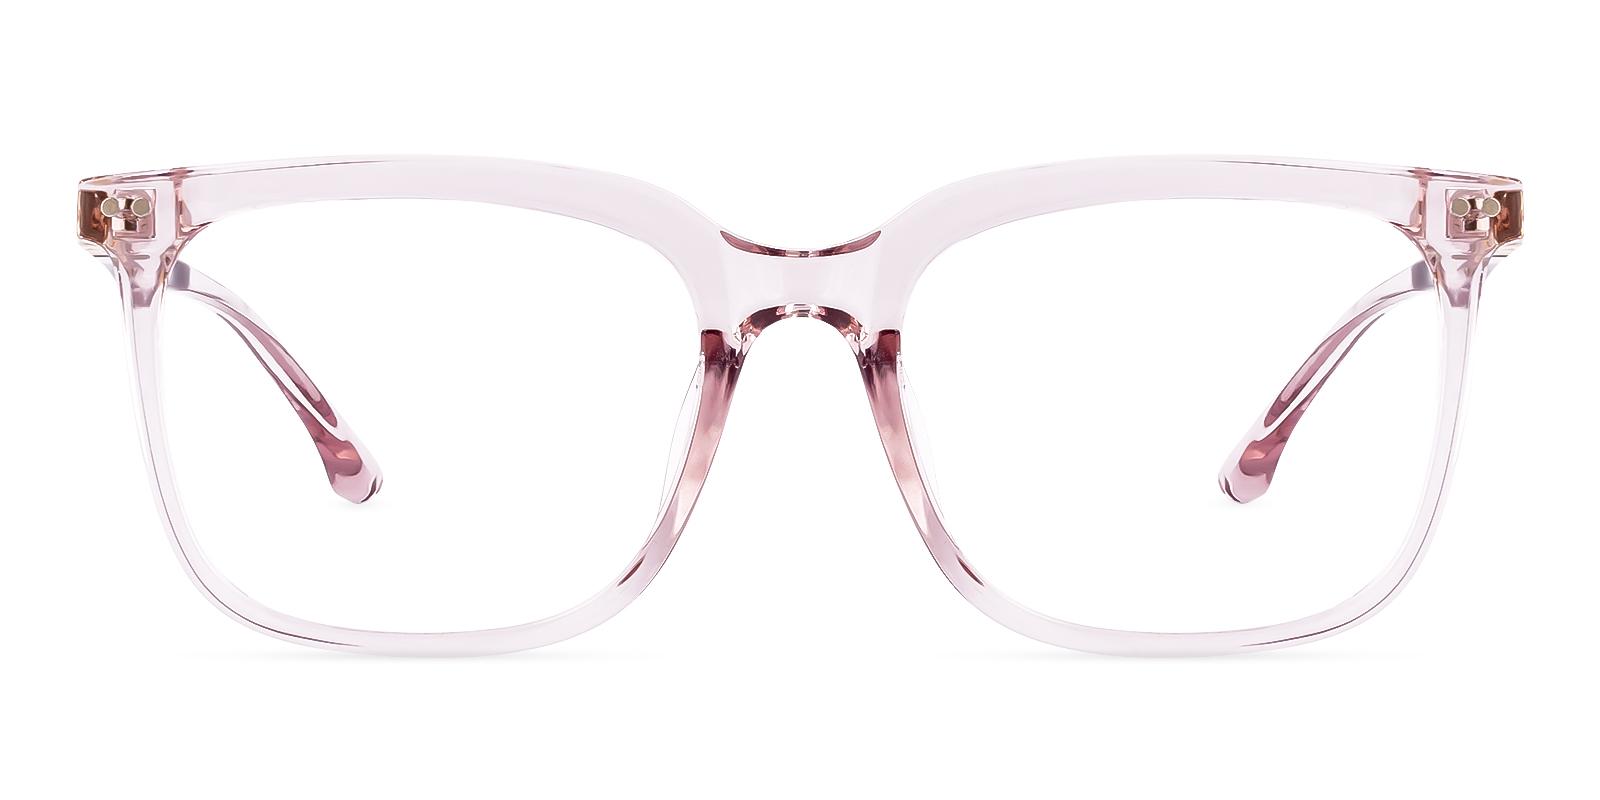 Florose Pink Plastic Eyeglasses , UniversalBridgeFit Frames from ABBE Glasses